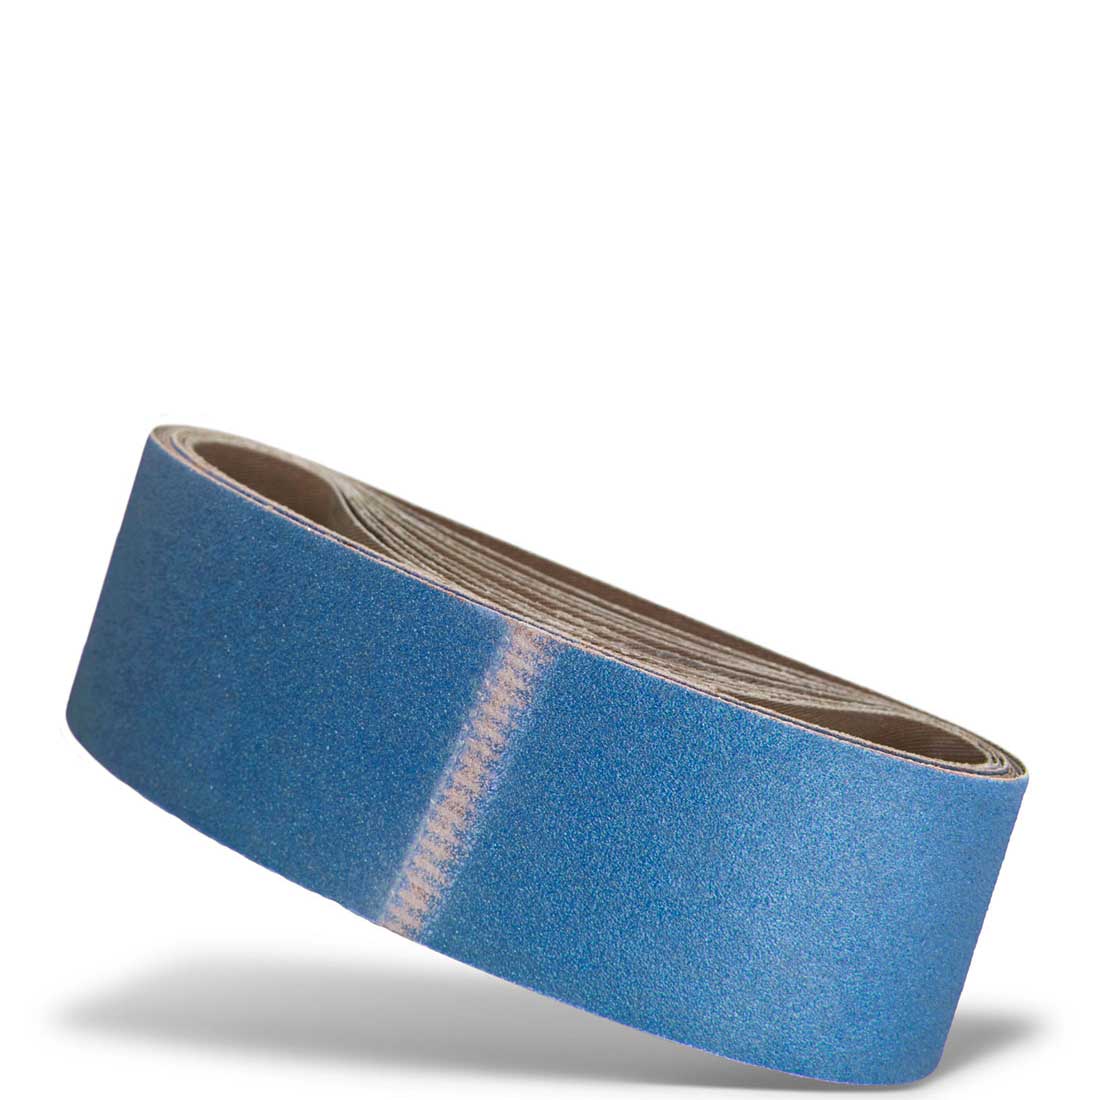 MENZER sanding belts for hand belt sanders, G36–120, 75 x 533 mm / zirconium aluminium oxide